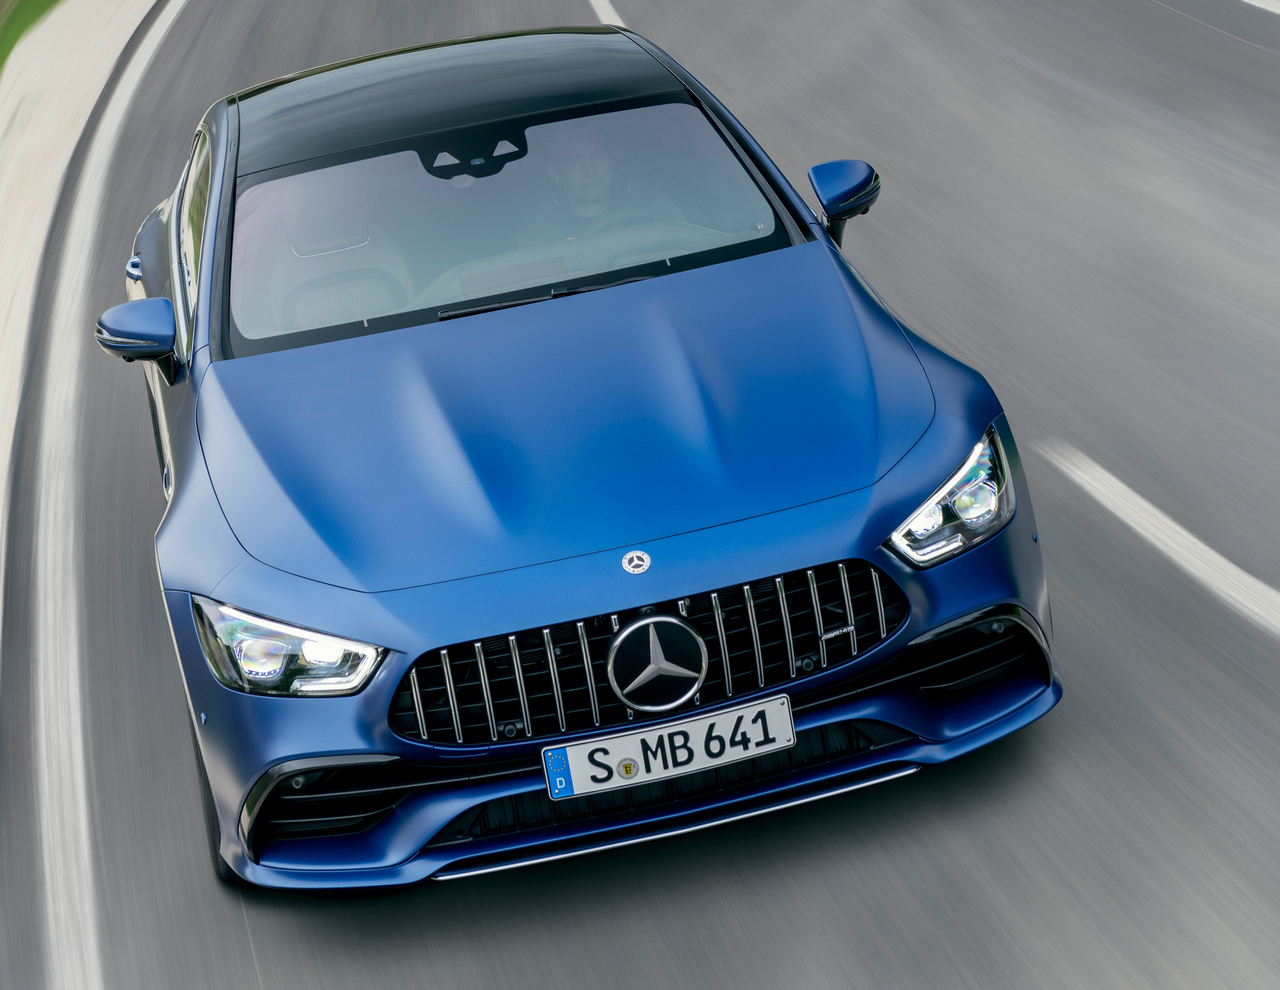 Mercedes-AMG GT 53 4MATIC+ (Kraftstoffverbrauch kombiniert: 8,7–8,6 l/100 km, CO2-Emissionen kombiniert: 198-196 g/km); 2021; Exterieur: spektralblau magno; Interieur: Leder Exklusiv Nappa STYLE tartufobraun/schwarz, Performance Lenkrad in Leder Nappa mit Lenkradtasten;Kraftstoffverbrauch kombiniert: 8,7–8,6 l/100 km, CO2-Emissionen kombiniert: 198-196 g/km *<br /> Mercedes-AMG GT 53 4MATIC+ (combined fuel consumption: 8,7-8,6 l/100 km, combined CO2 emissions: 198-196 g/km); 2021; exterior: spectrale blue magno; interior: exclusive leather nappa STYLE truffle brown/black, steering wheel in nappa leather with steering wheel buttons;Combined fuel consumption: 8,7-8,6 l/100 km, combined CO2 emissions: 198-196 g/km *